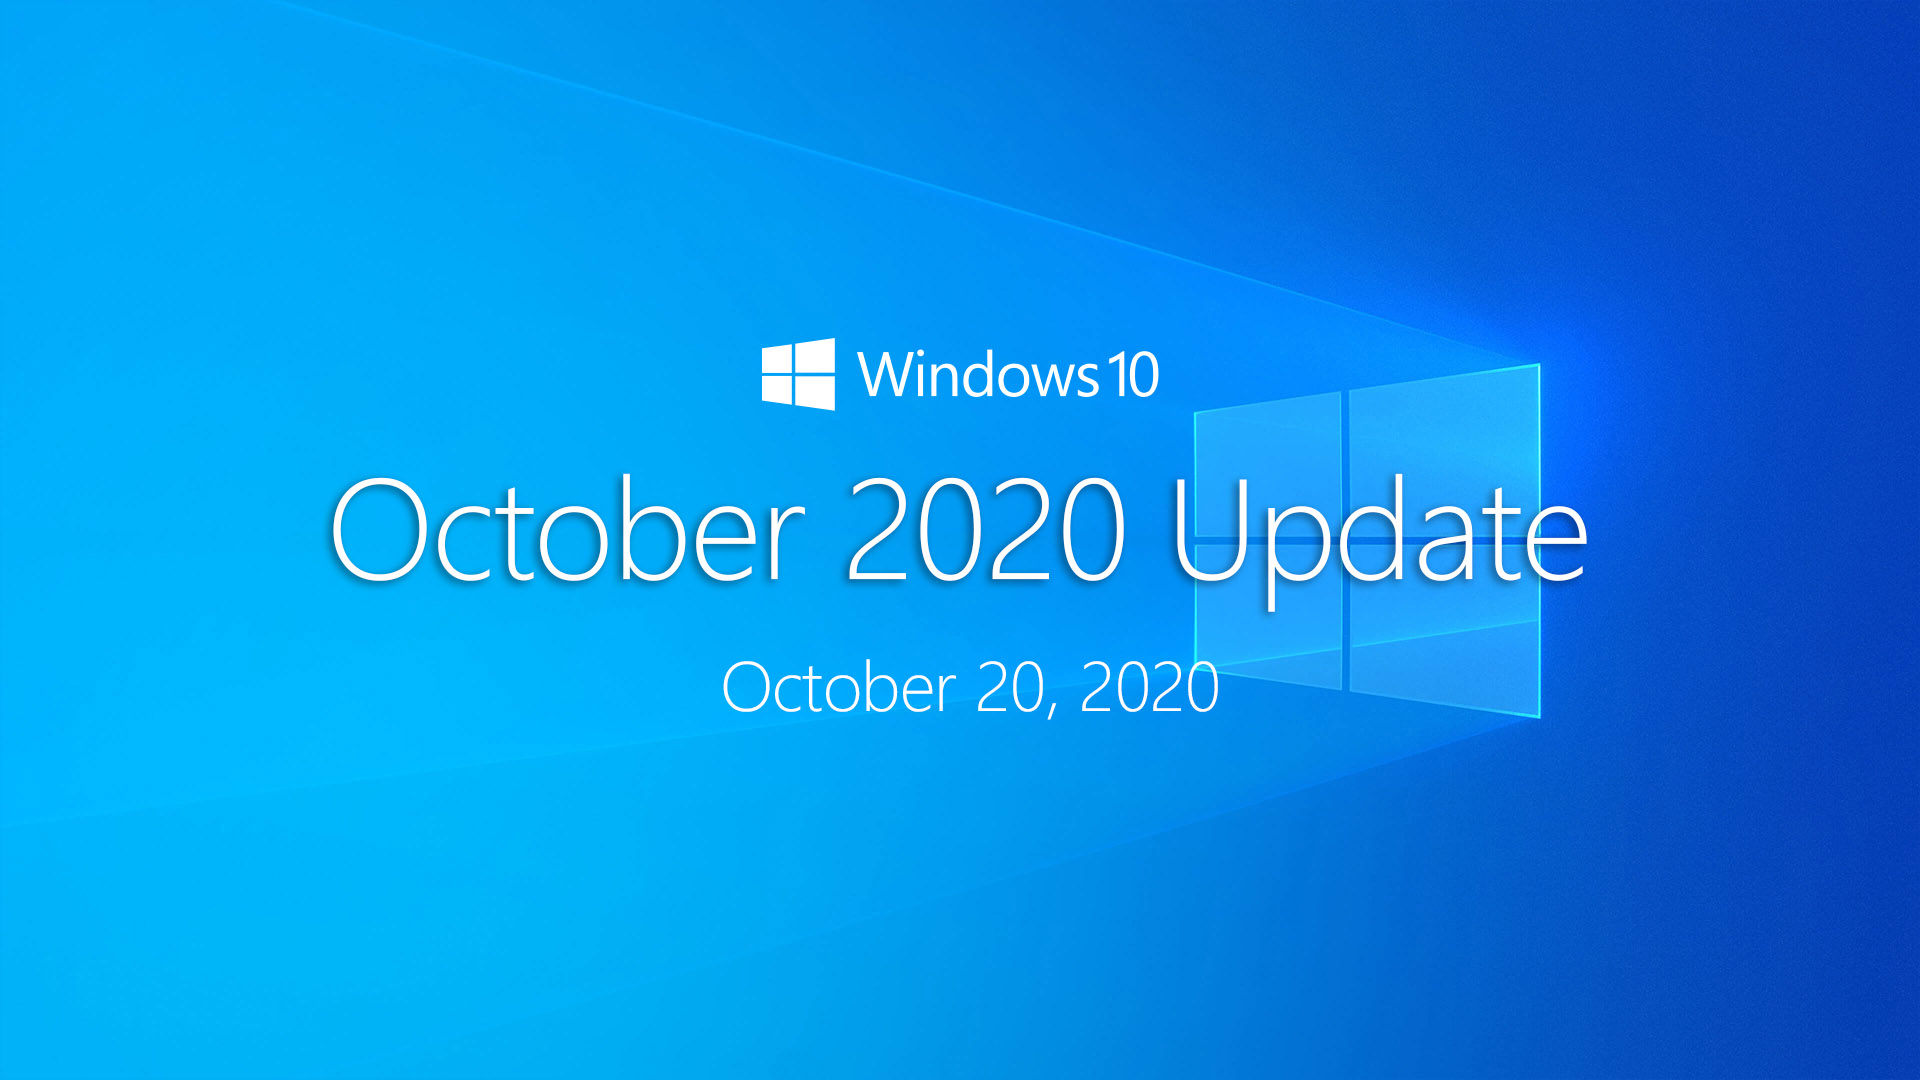 Microsoft Officially Announces The Windows 10 October